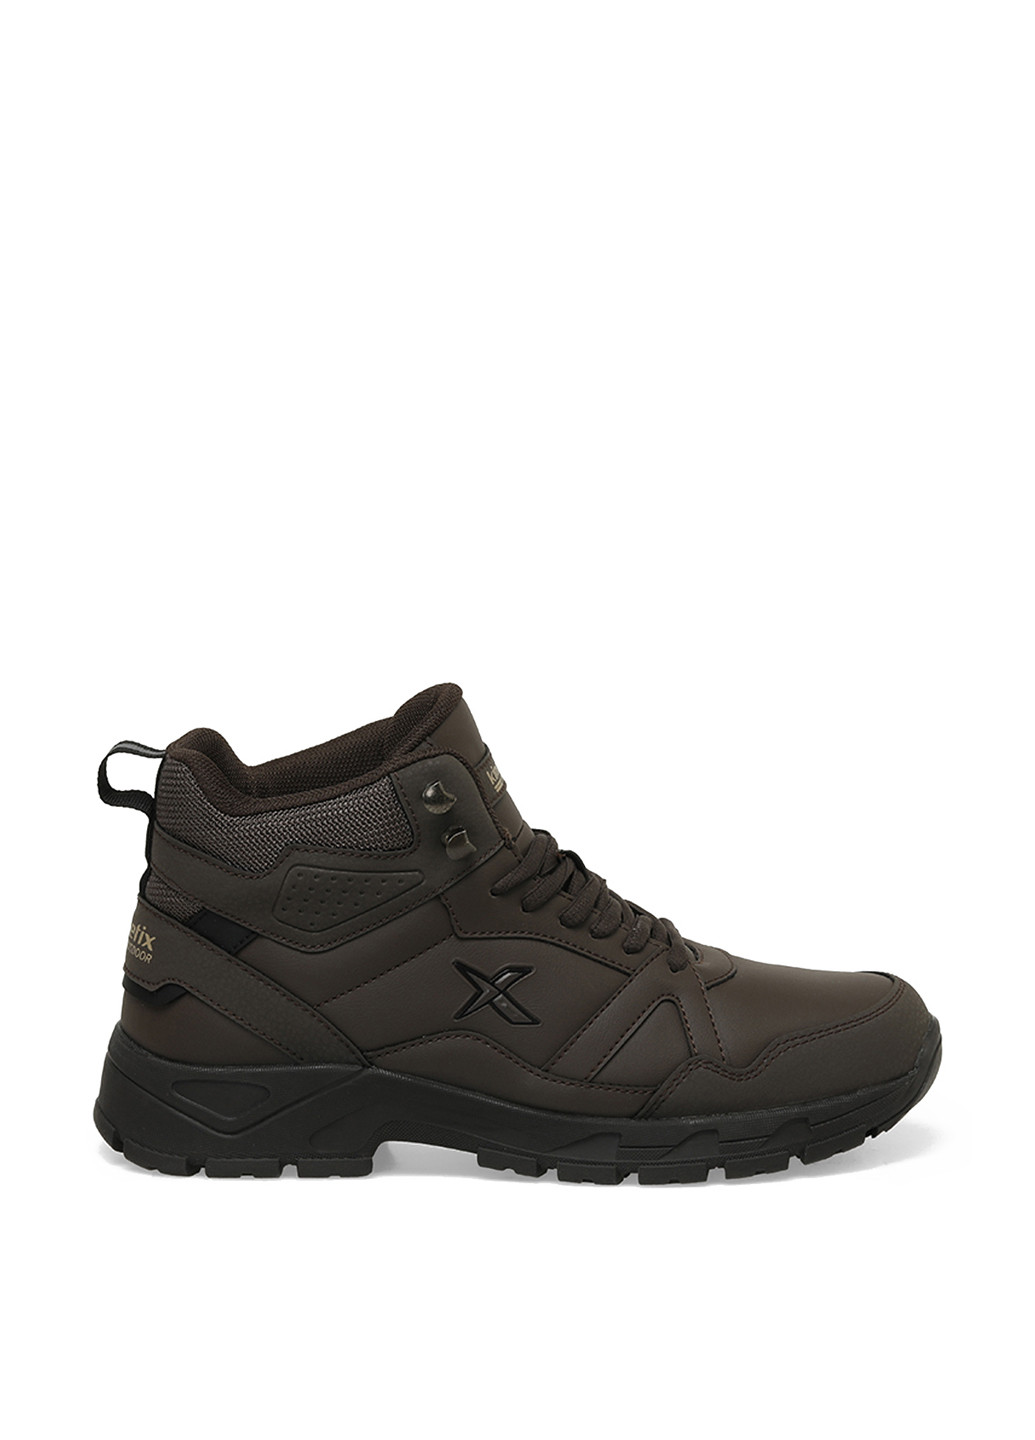 Темно-коричневые осенние ботинки Kinetix